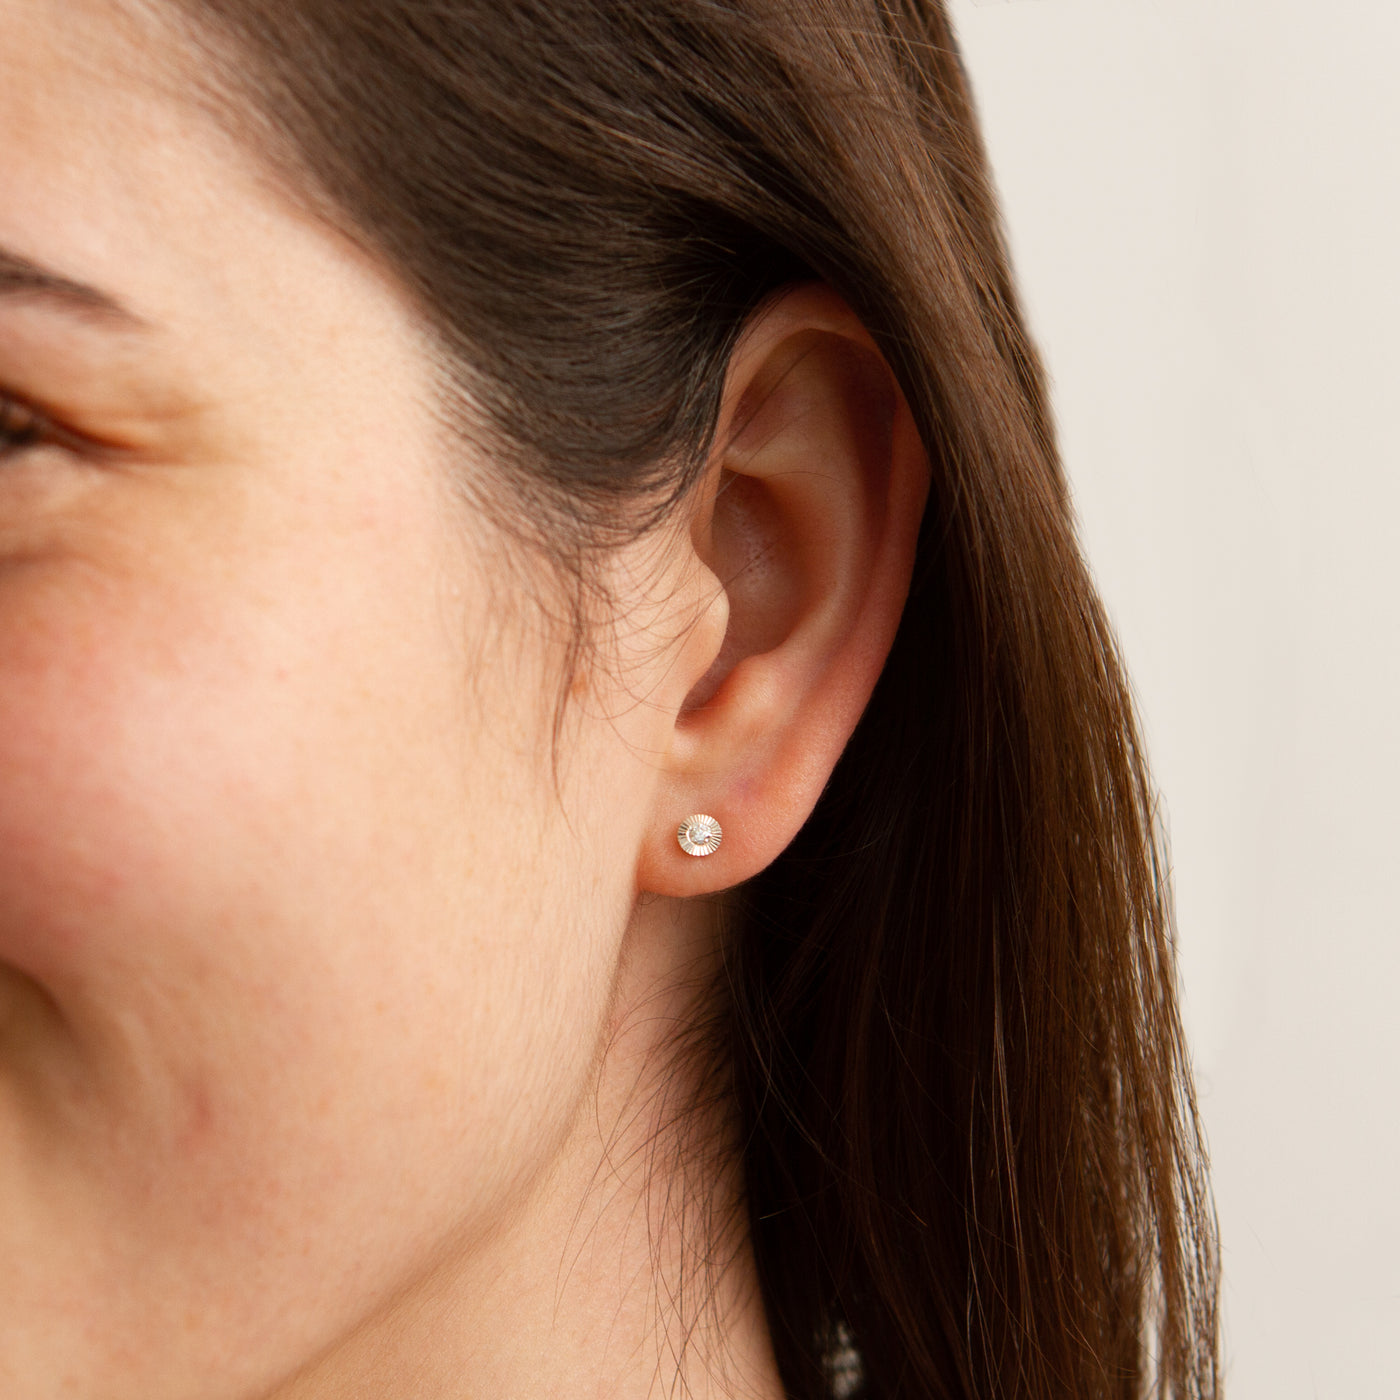 Small Aurora Diamond Stud Earring in Sterling Silver modeled on an ear